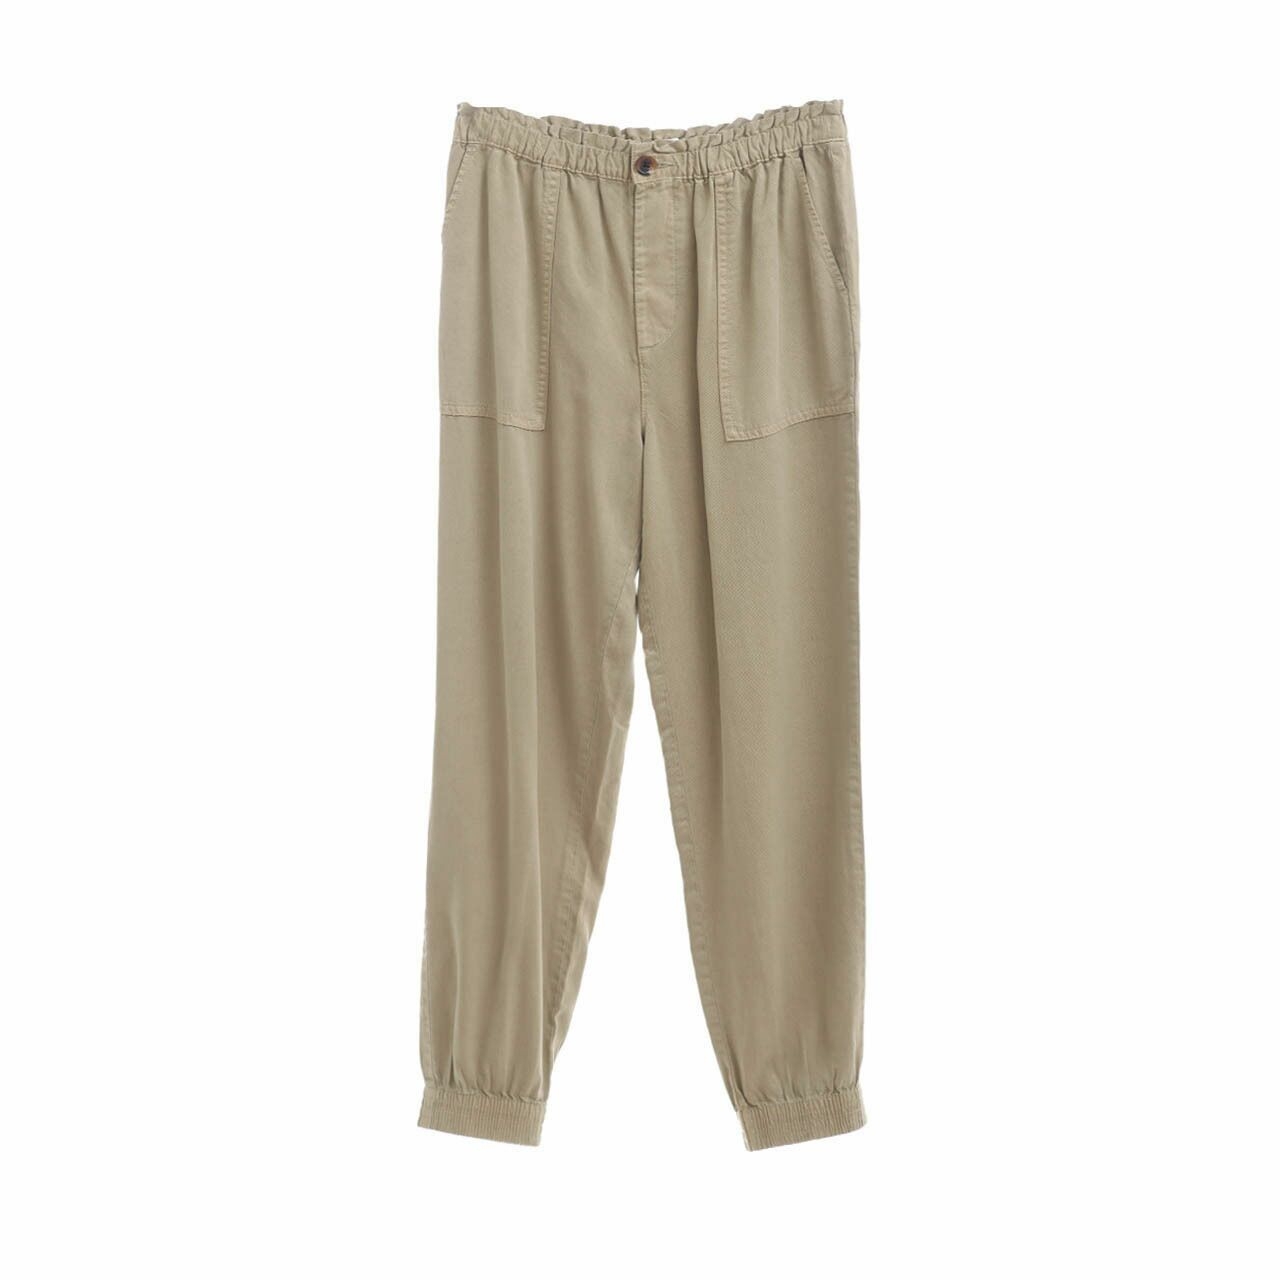 H&M Olive Long Pants